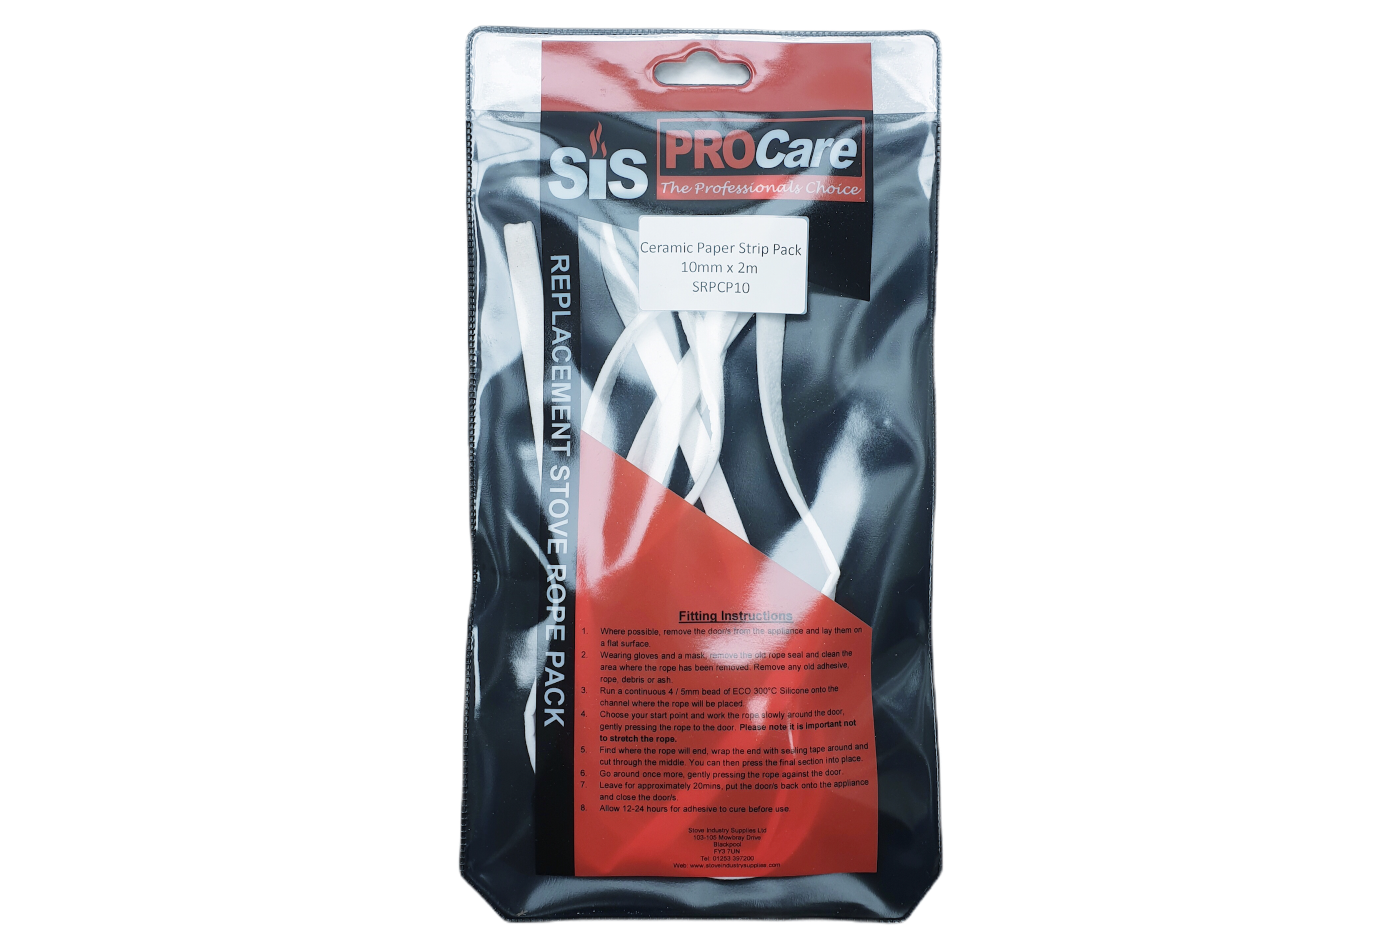 SiS Procare White 10 milimetre x 2 metre Ceramic Paper Strip Pack - product code SRPCP10